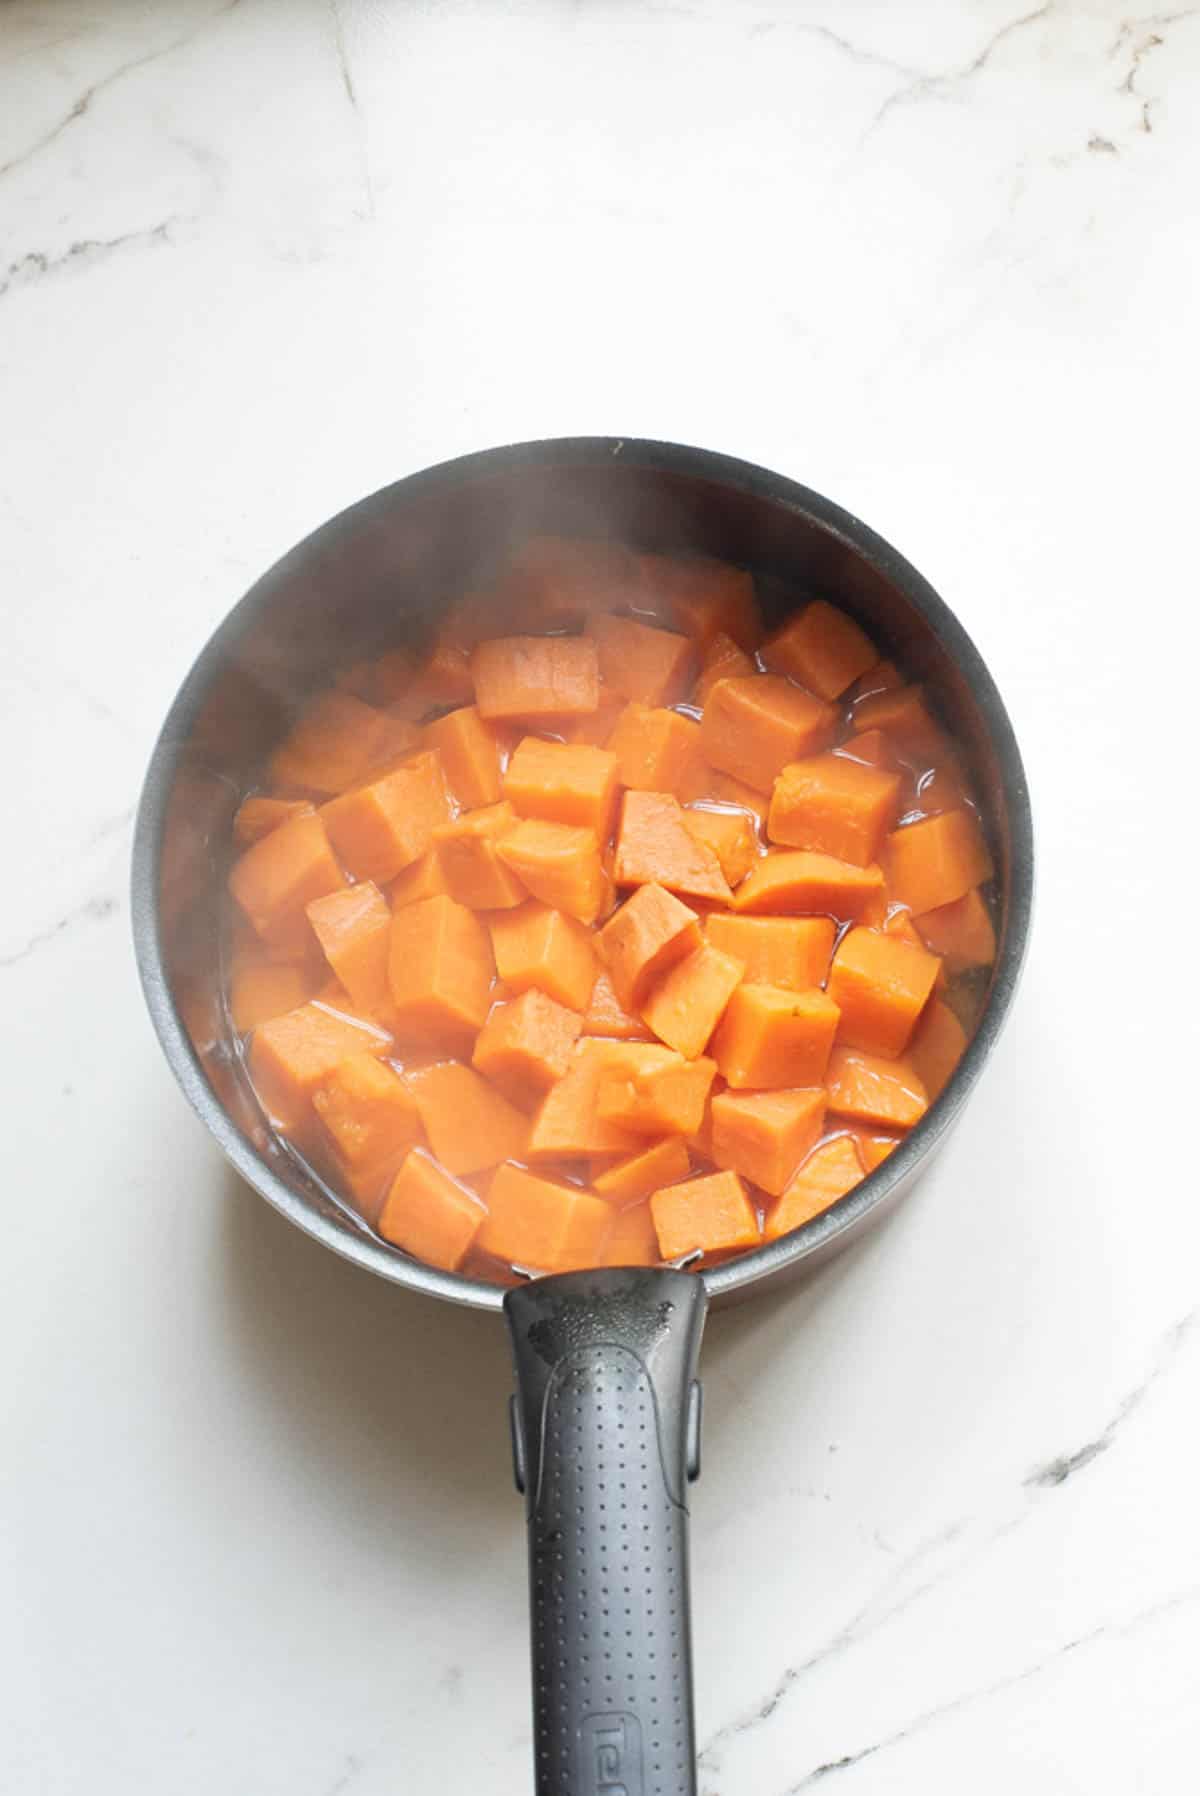 Boiled sweet potatoes in a saucepan.